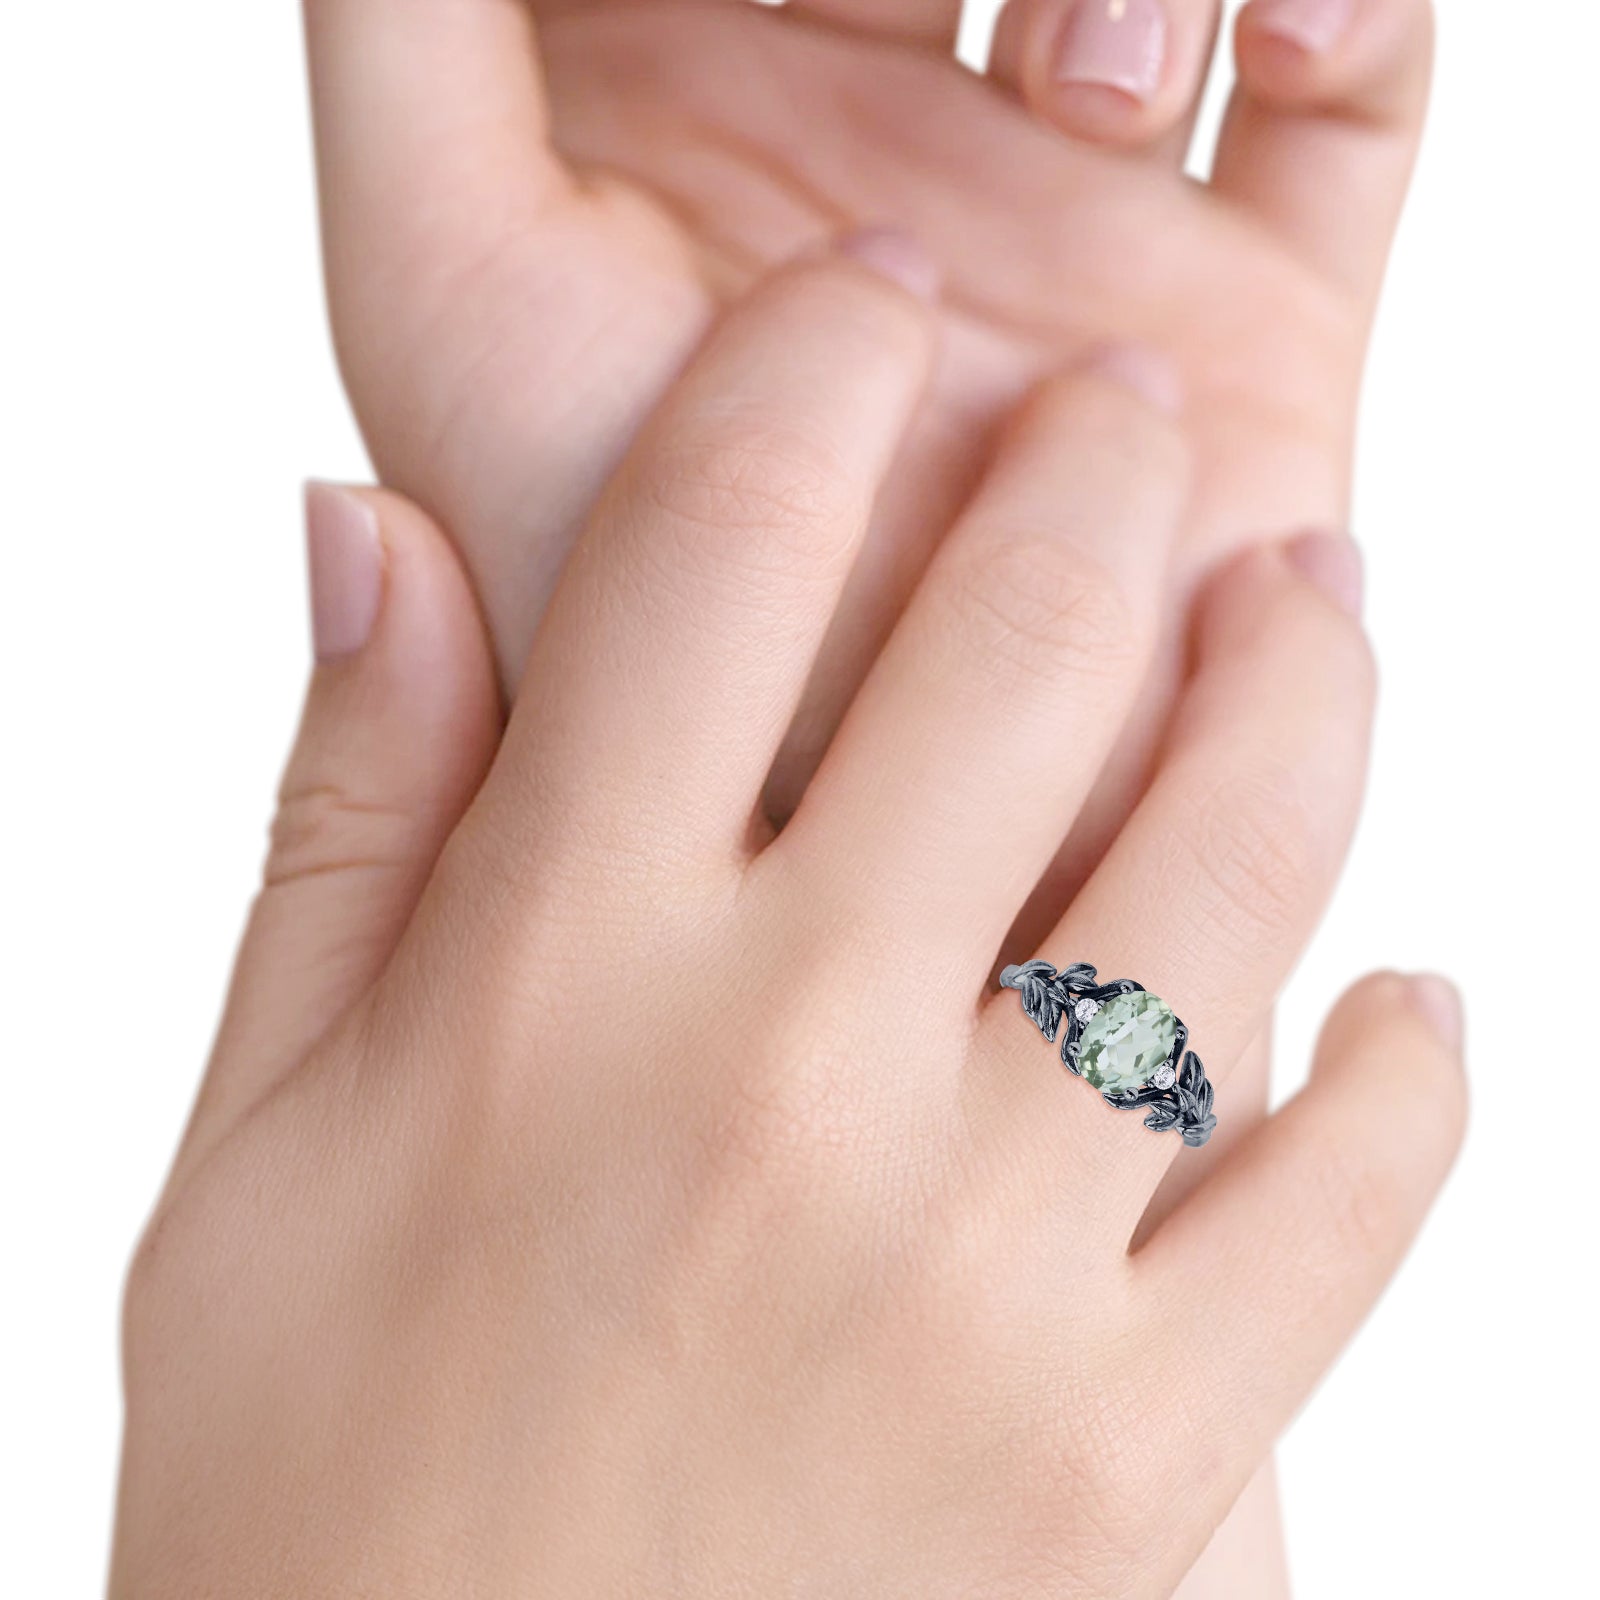 Leaf Style Oval Natural Green Amethyst Vintage Engagement Ring